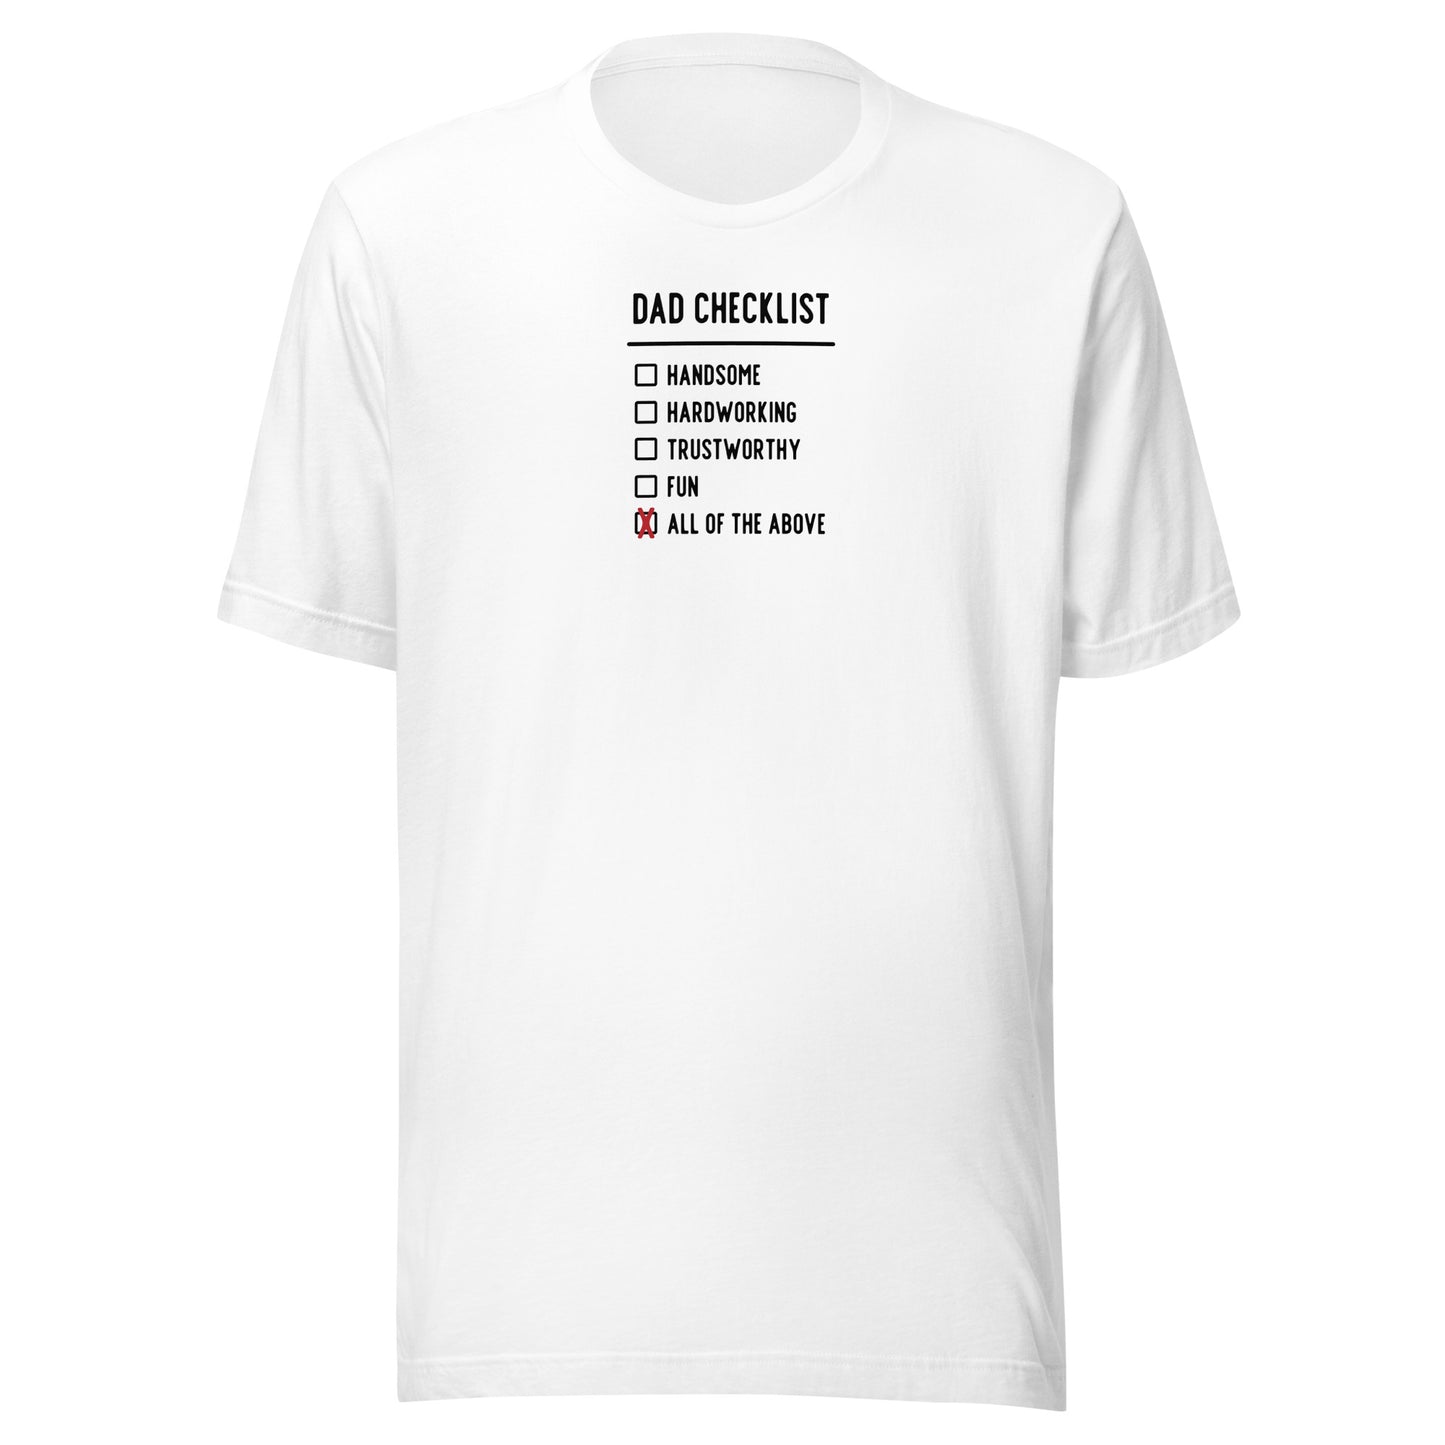 Dad Checklist T shirt